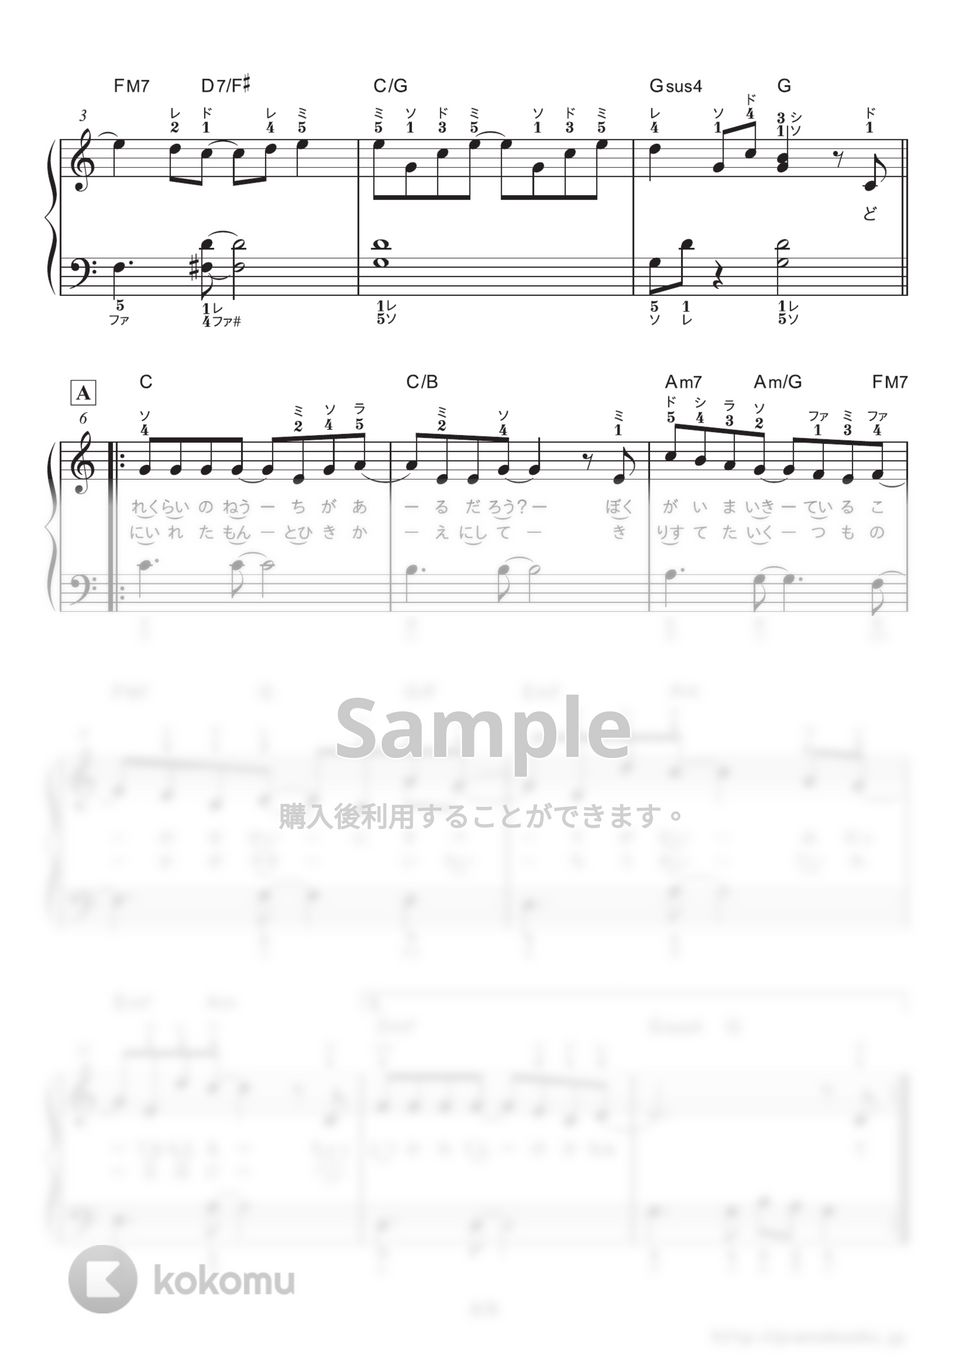 Mr.Children - HANABI (ドラマ『コード・ブルー』主題歌) by ピアノの本棚